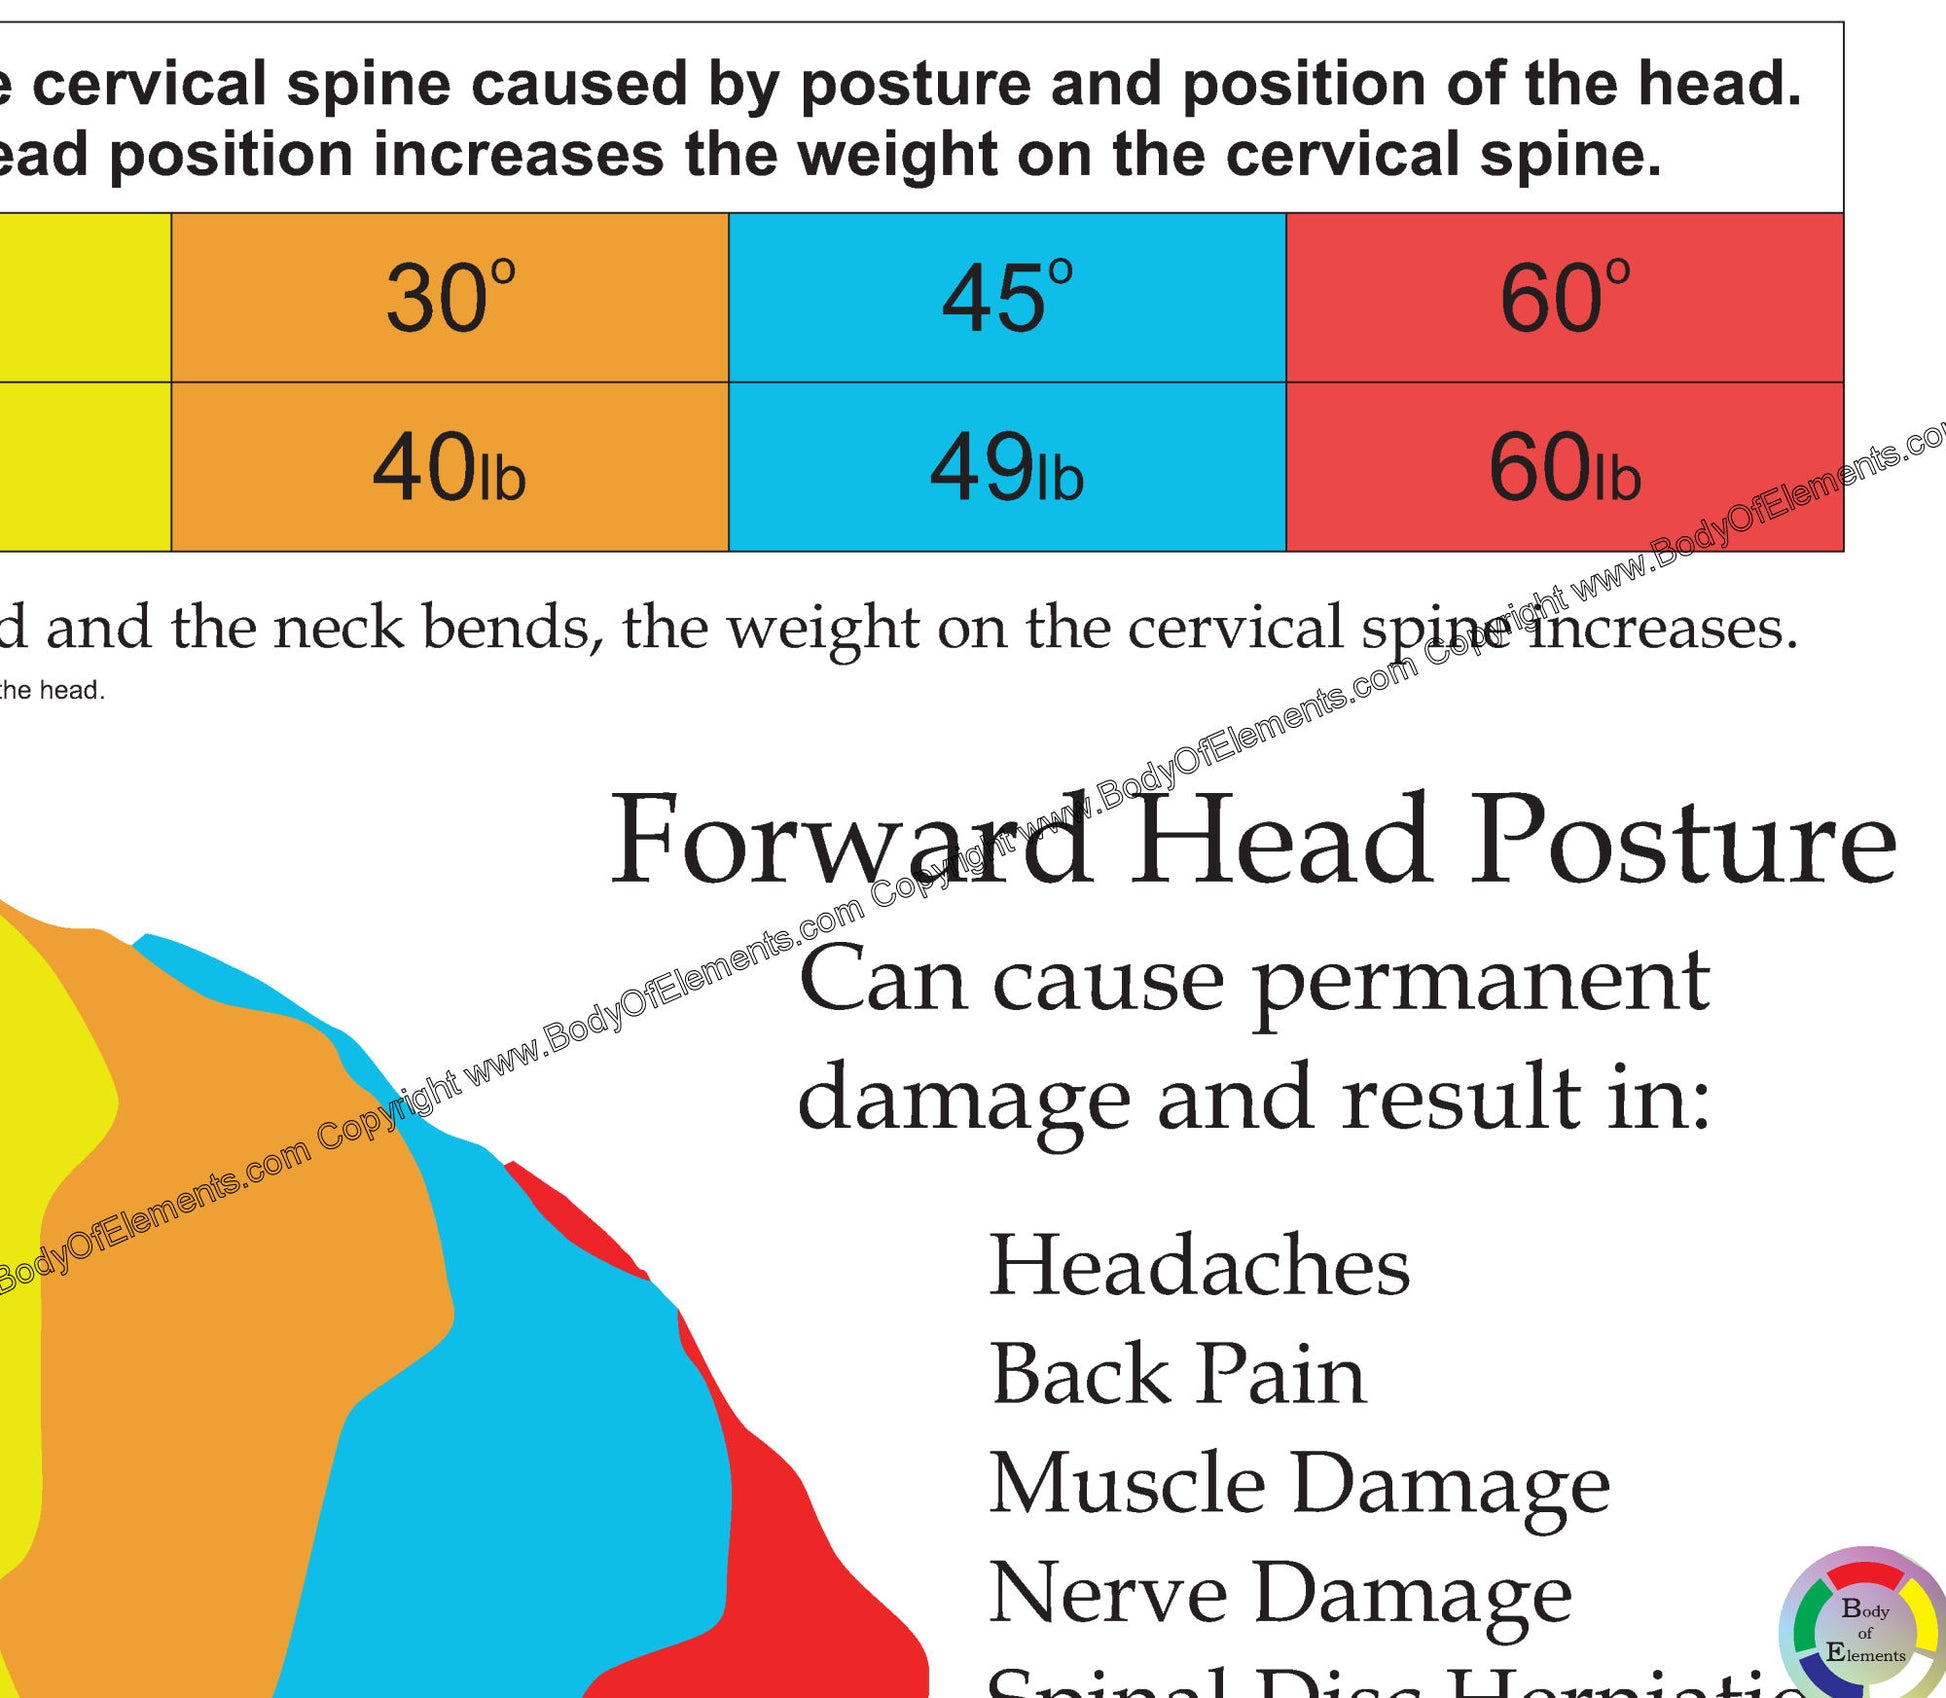 Forward Head Posture Pain Chart